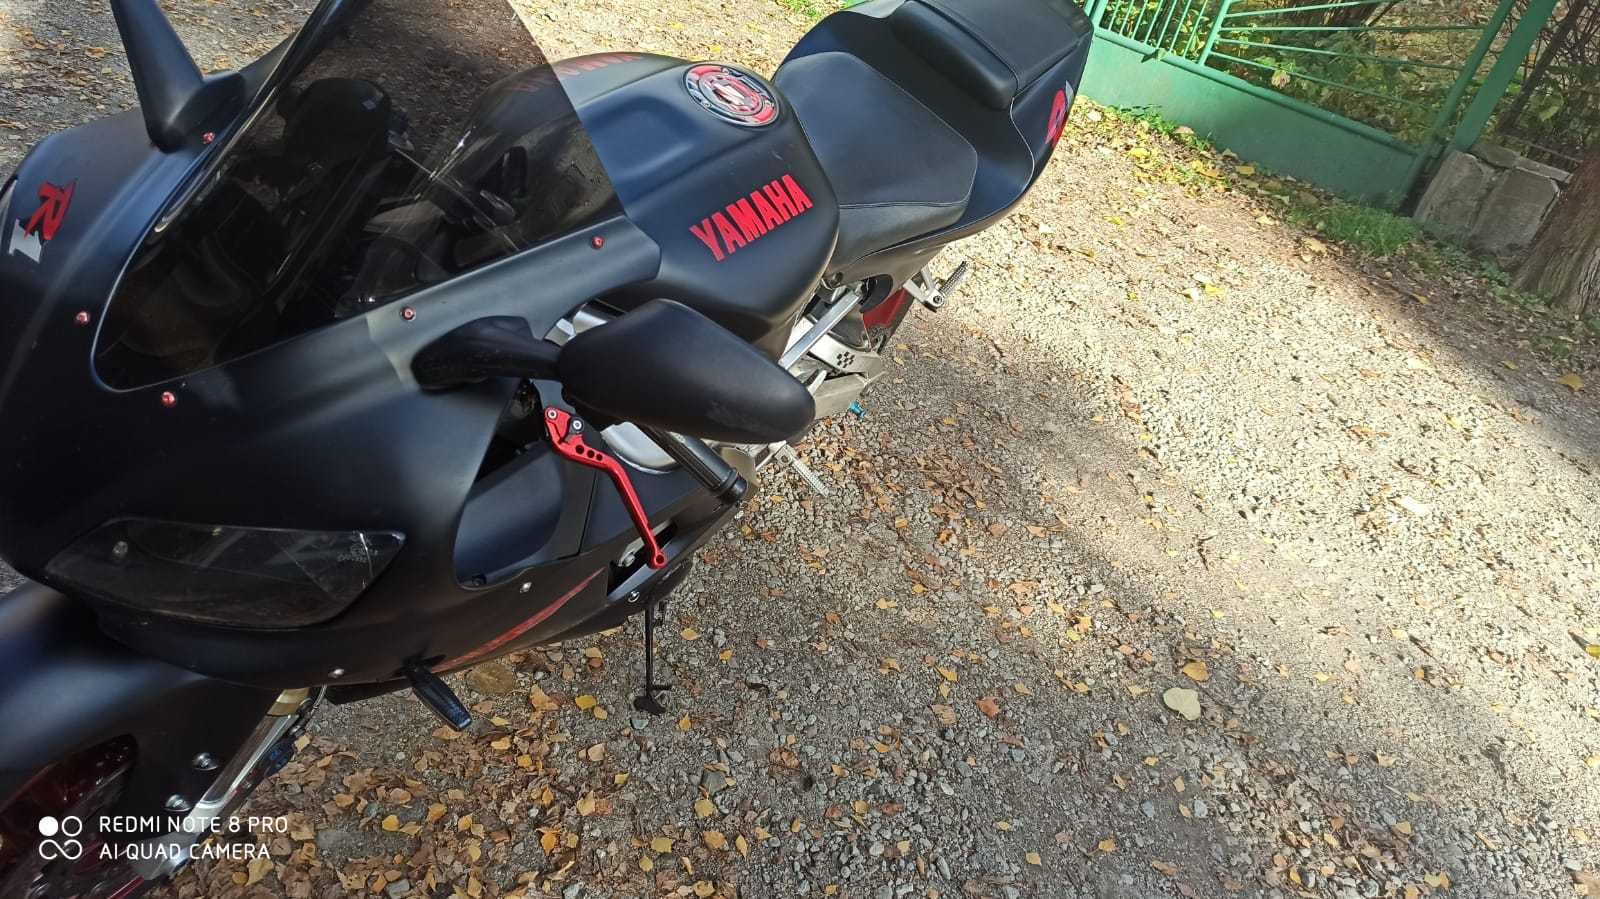 Motocykl Yamaha R1 czarny